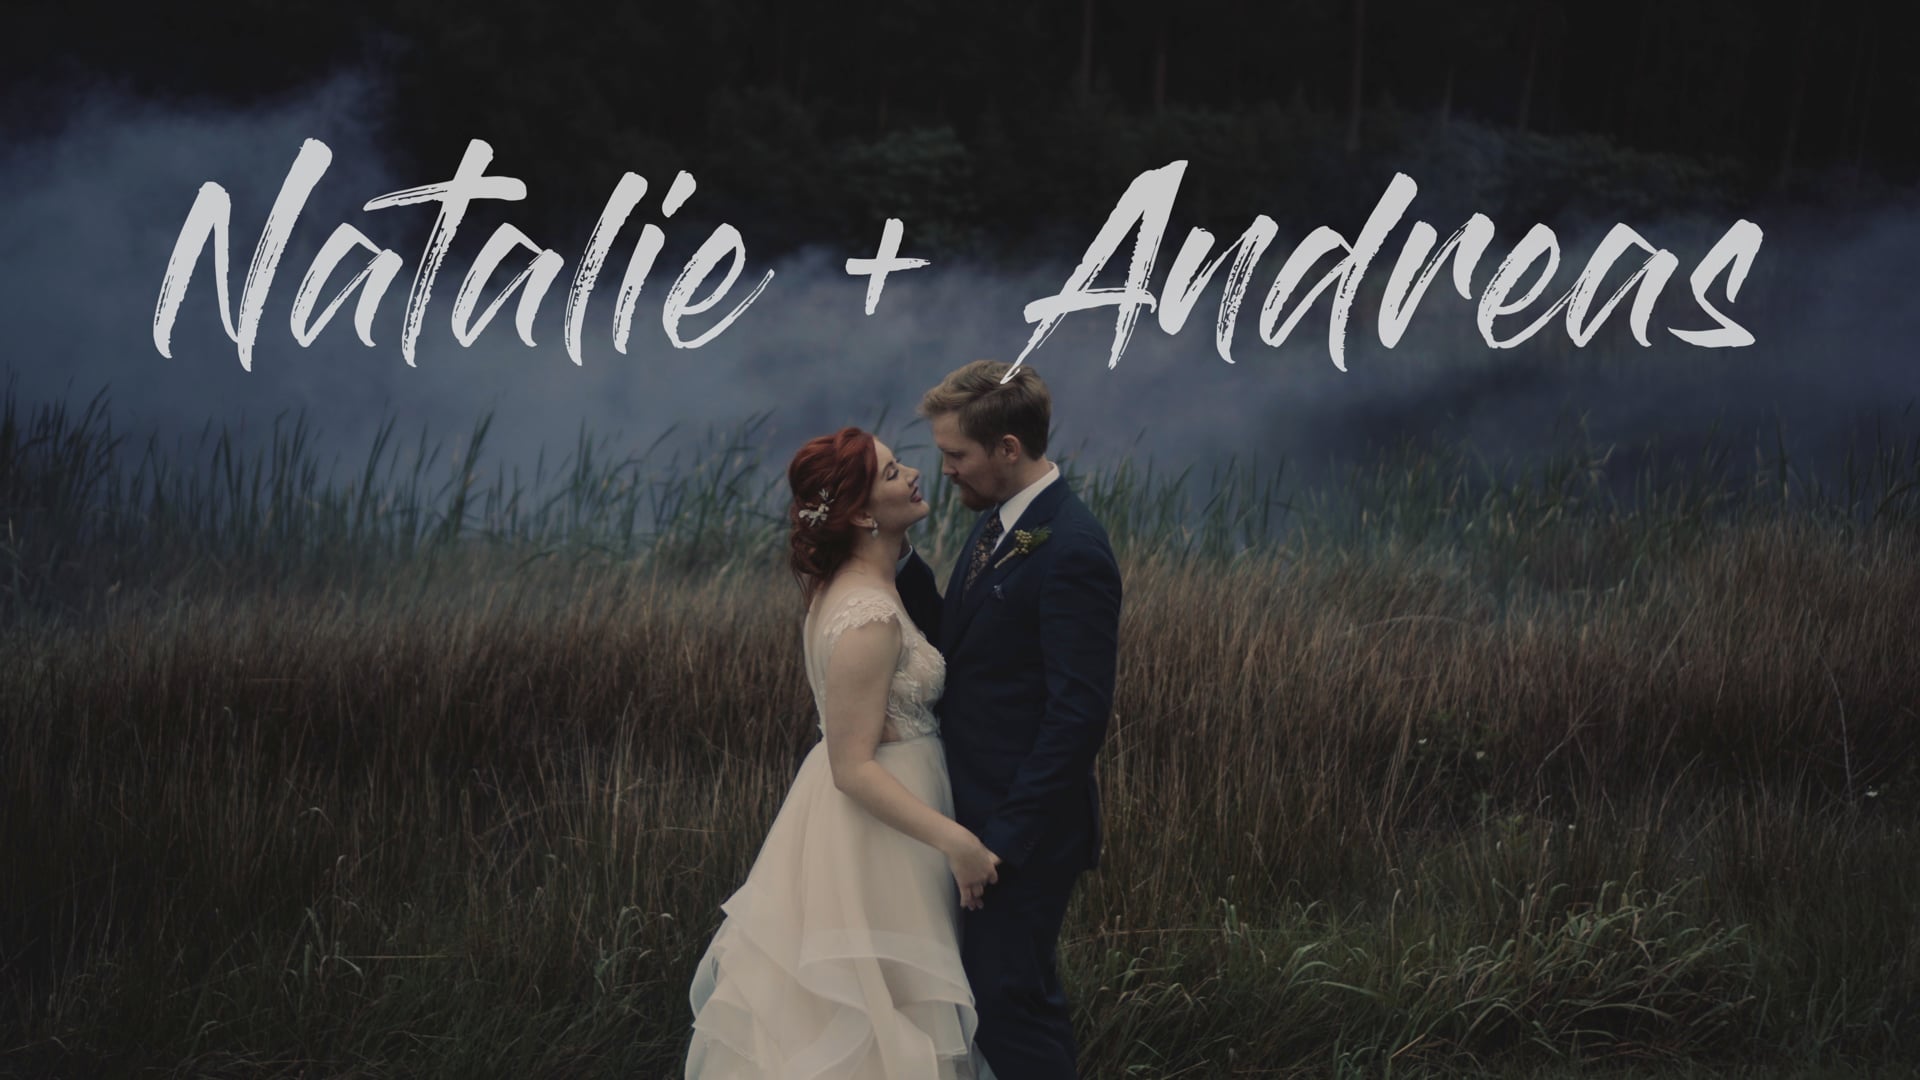 Natalie + Andreas - Cinematic Film